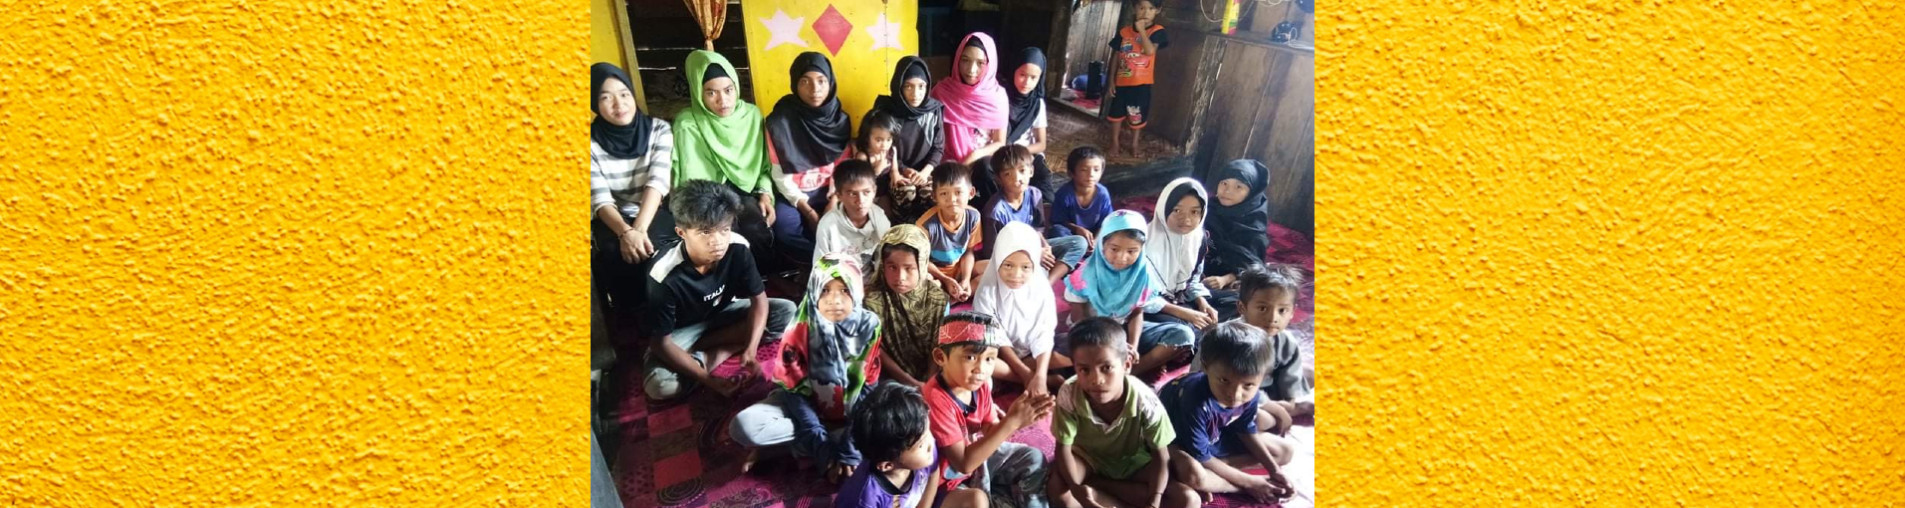 Seeking donations for 100 families in Sandakan